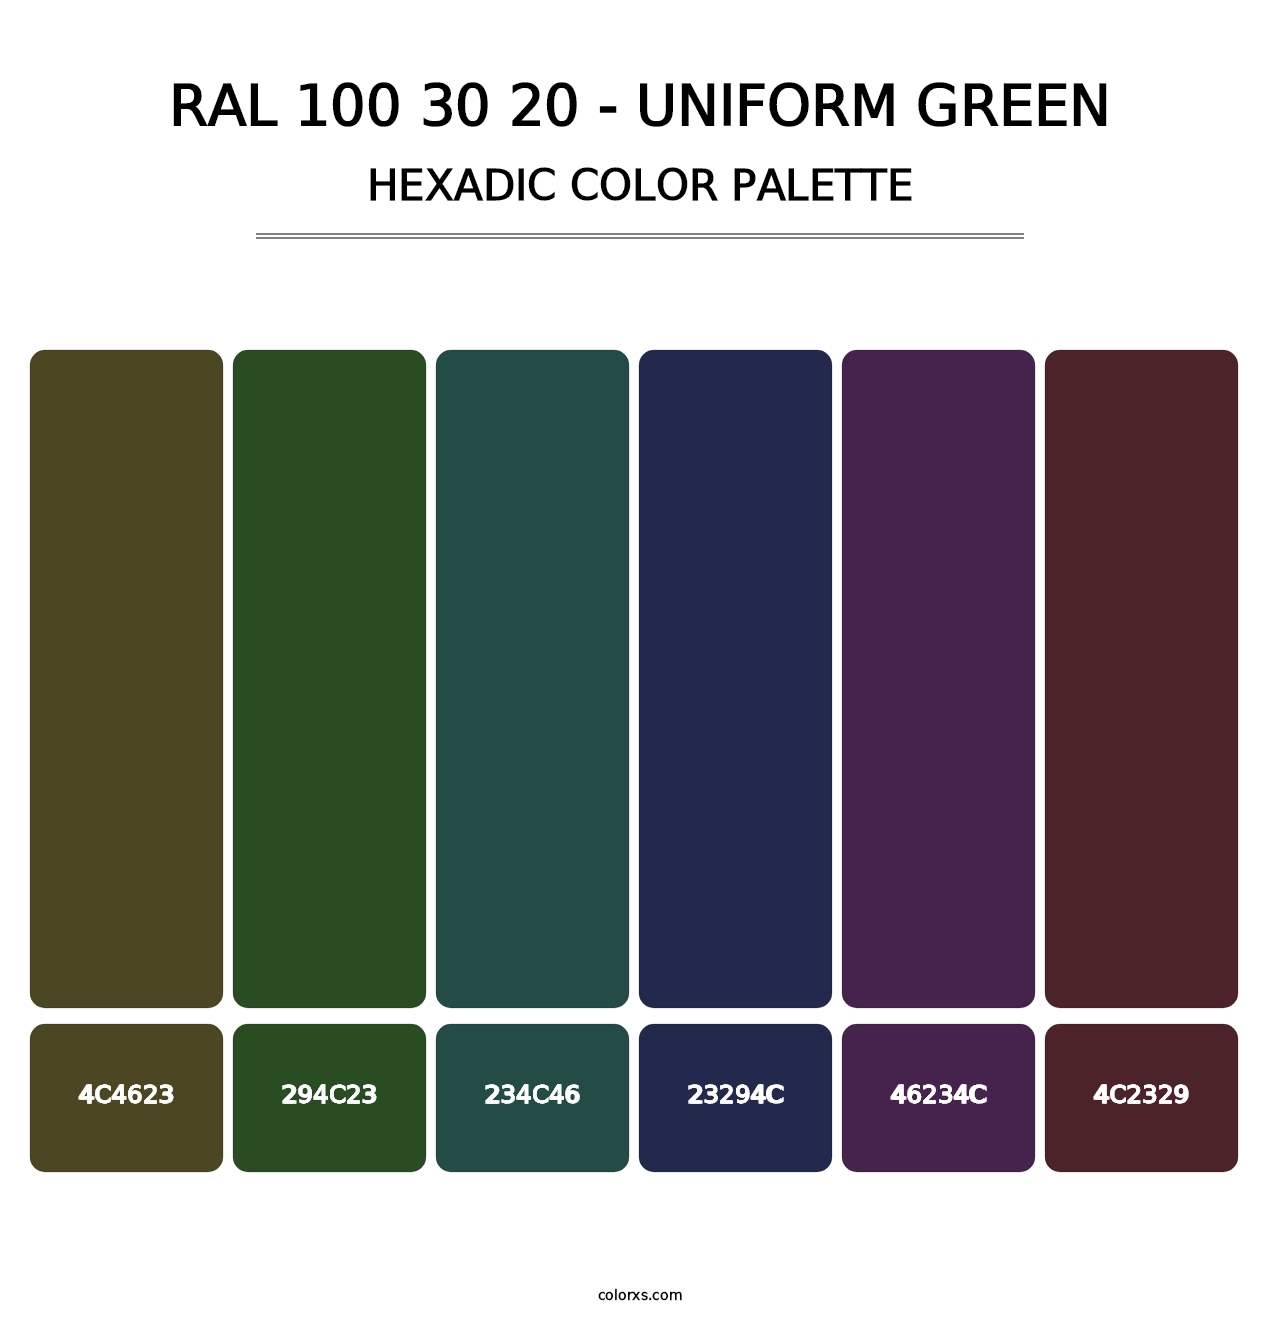 RAL 100 30 20 - Uniform Green - Hexadic Color Palette